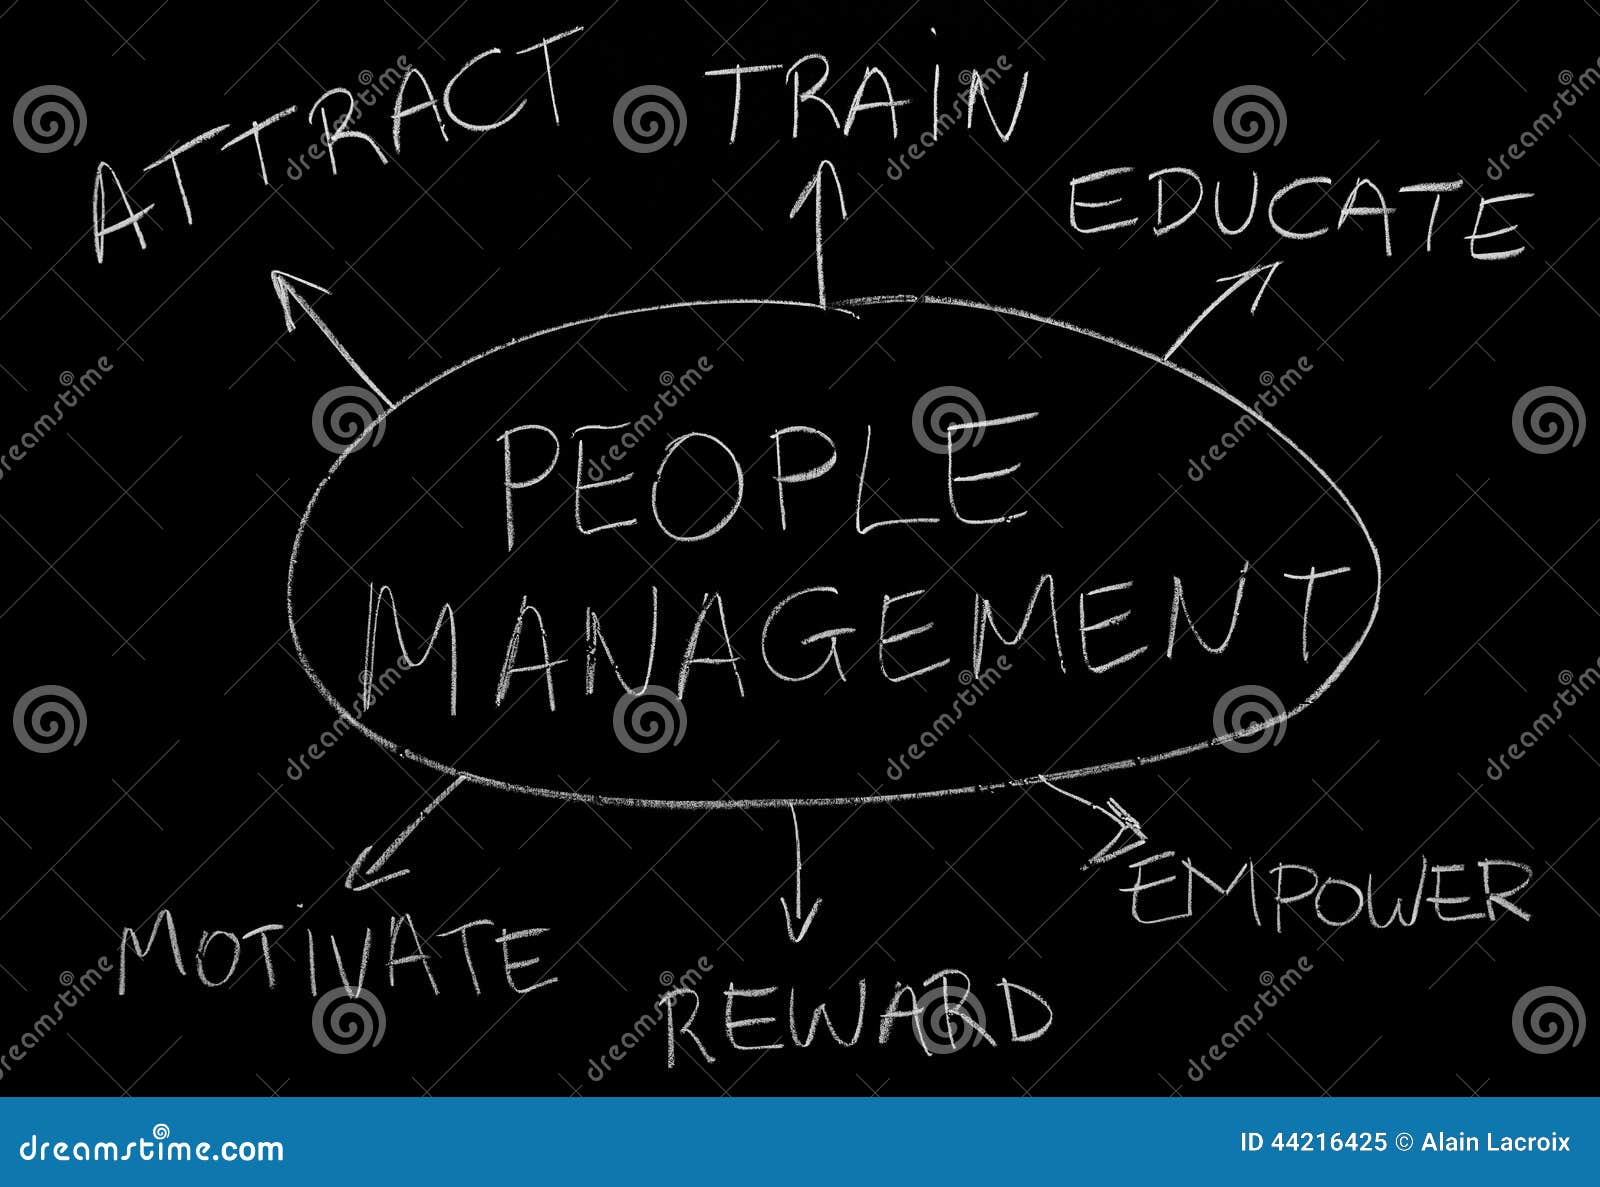 people management